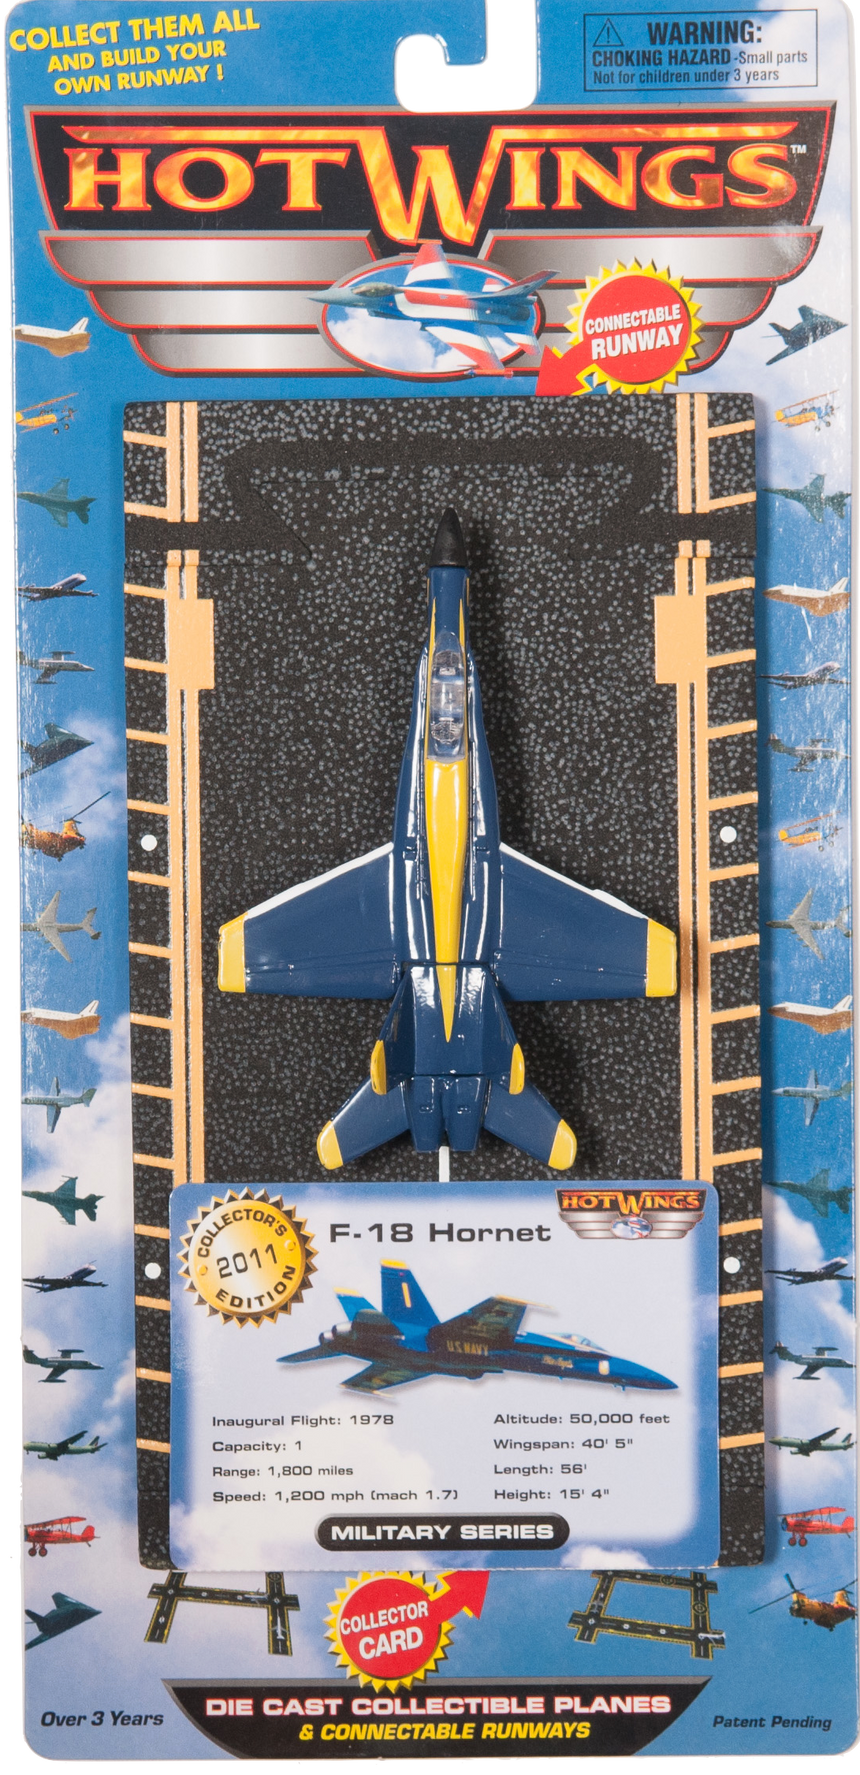 F-18 Hornet (Blue Angels)